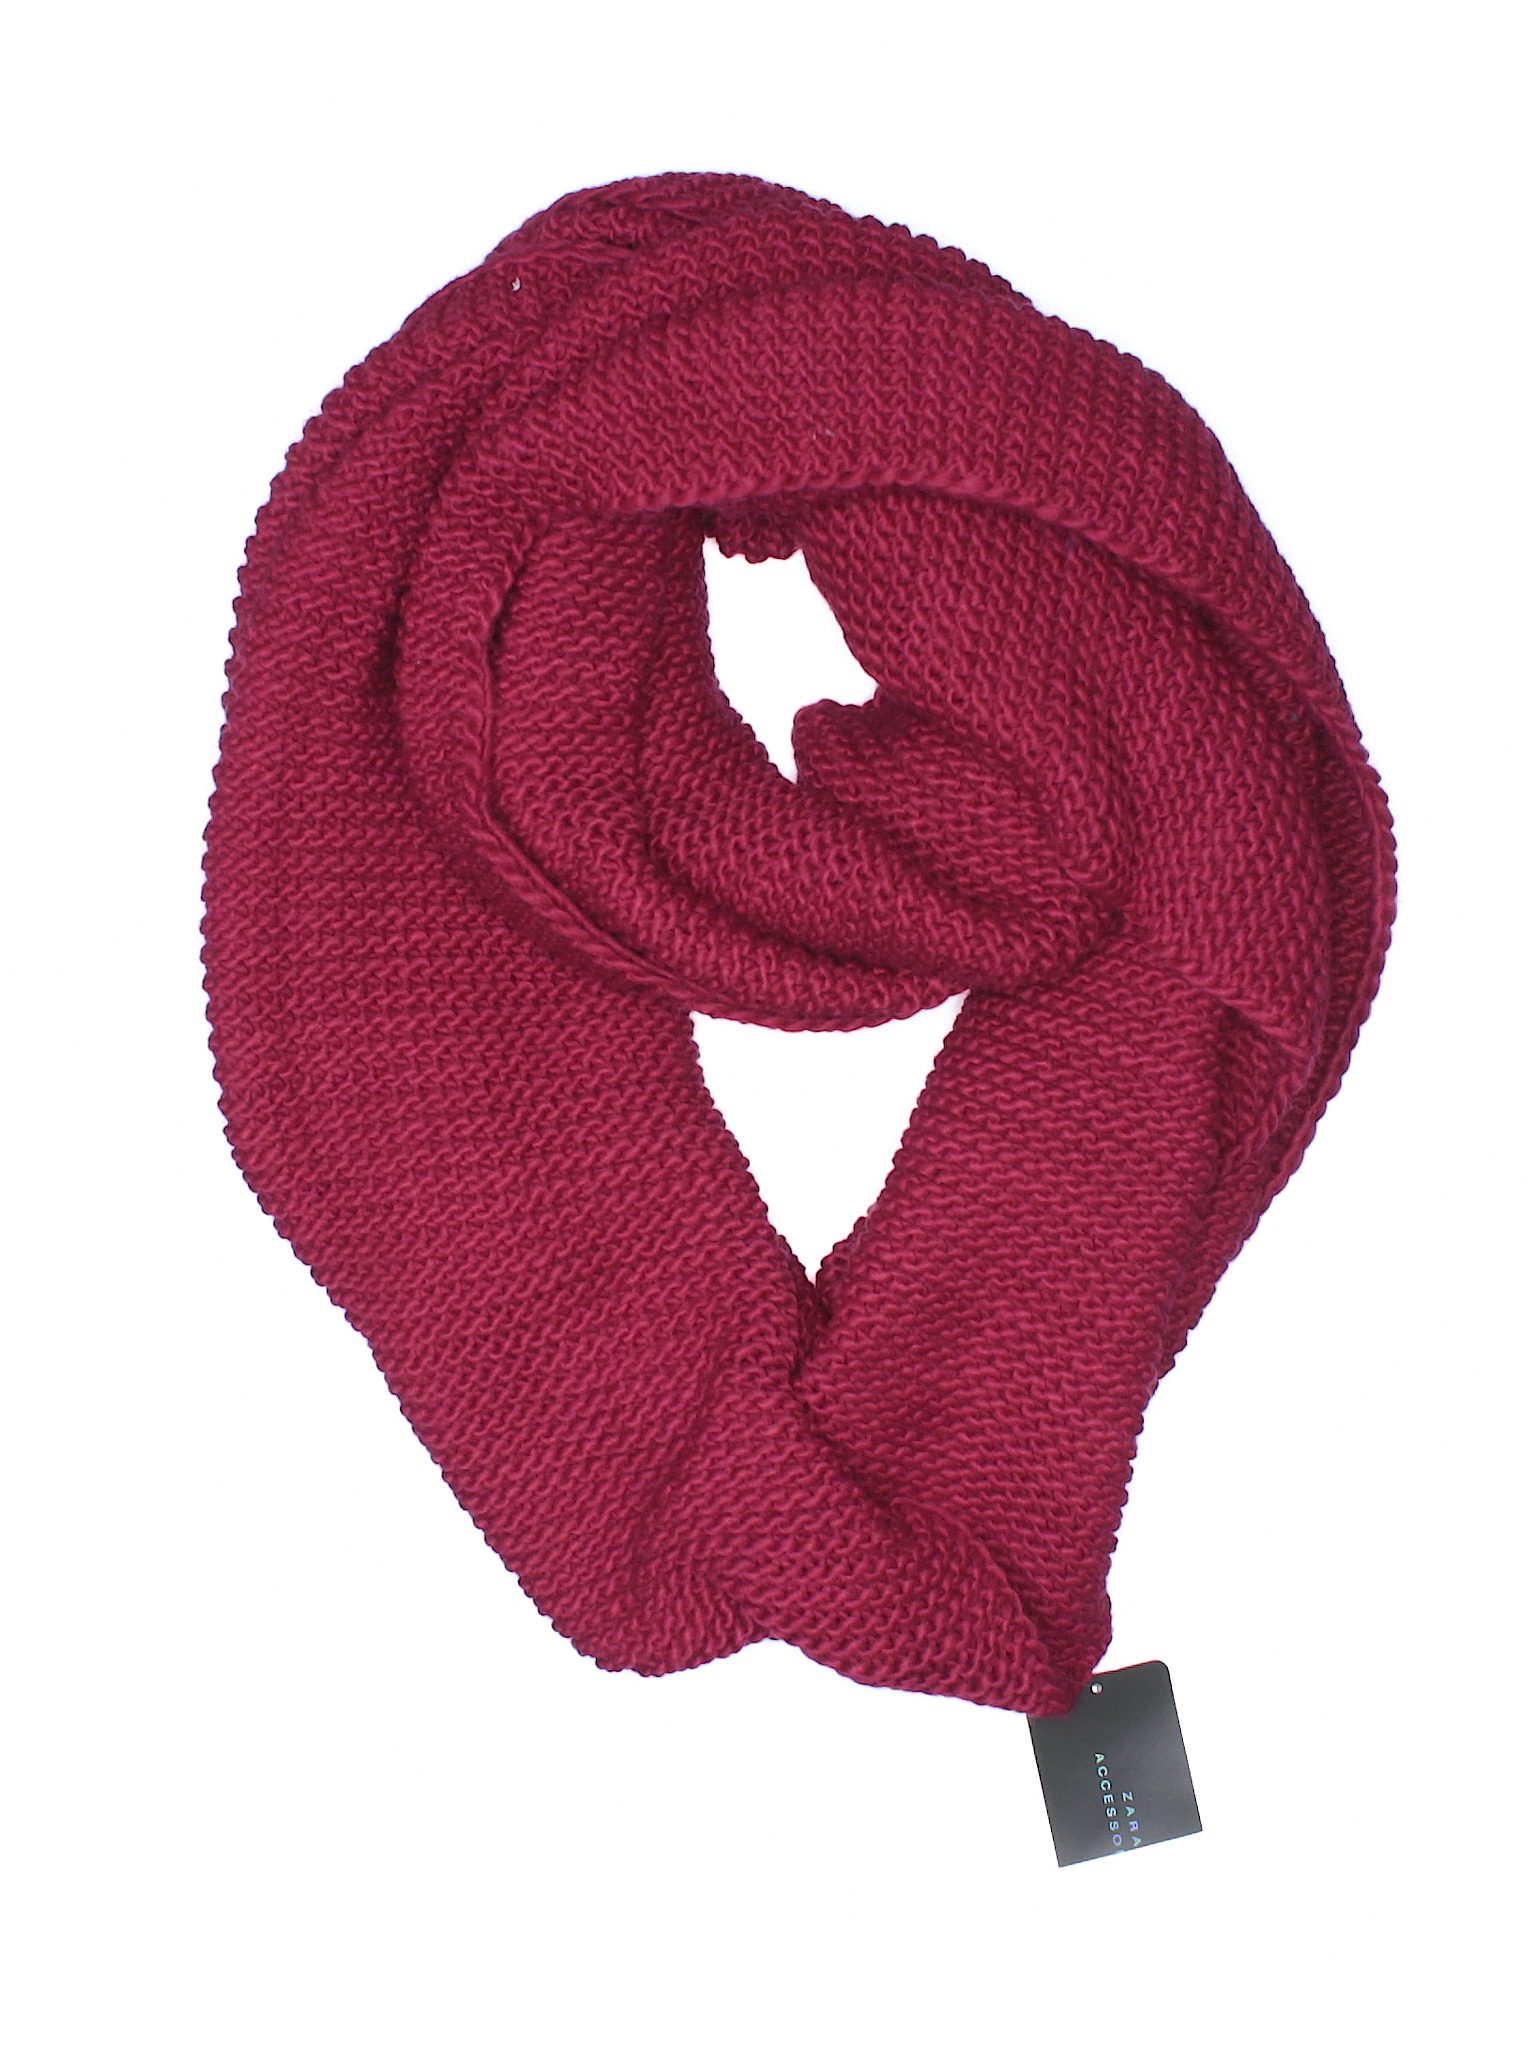 zara pink scarf